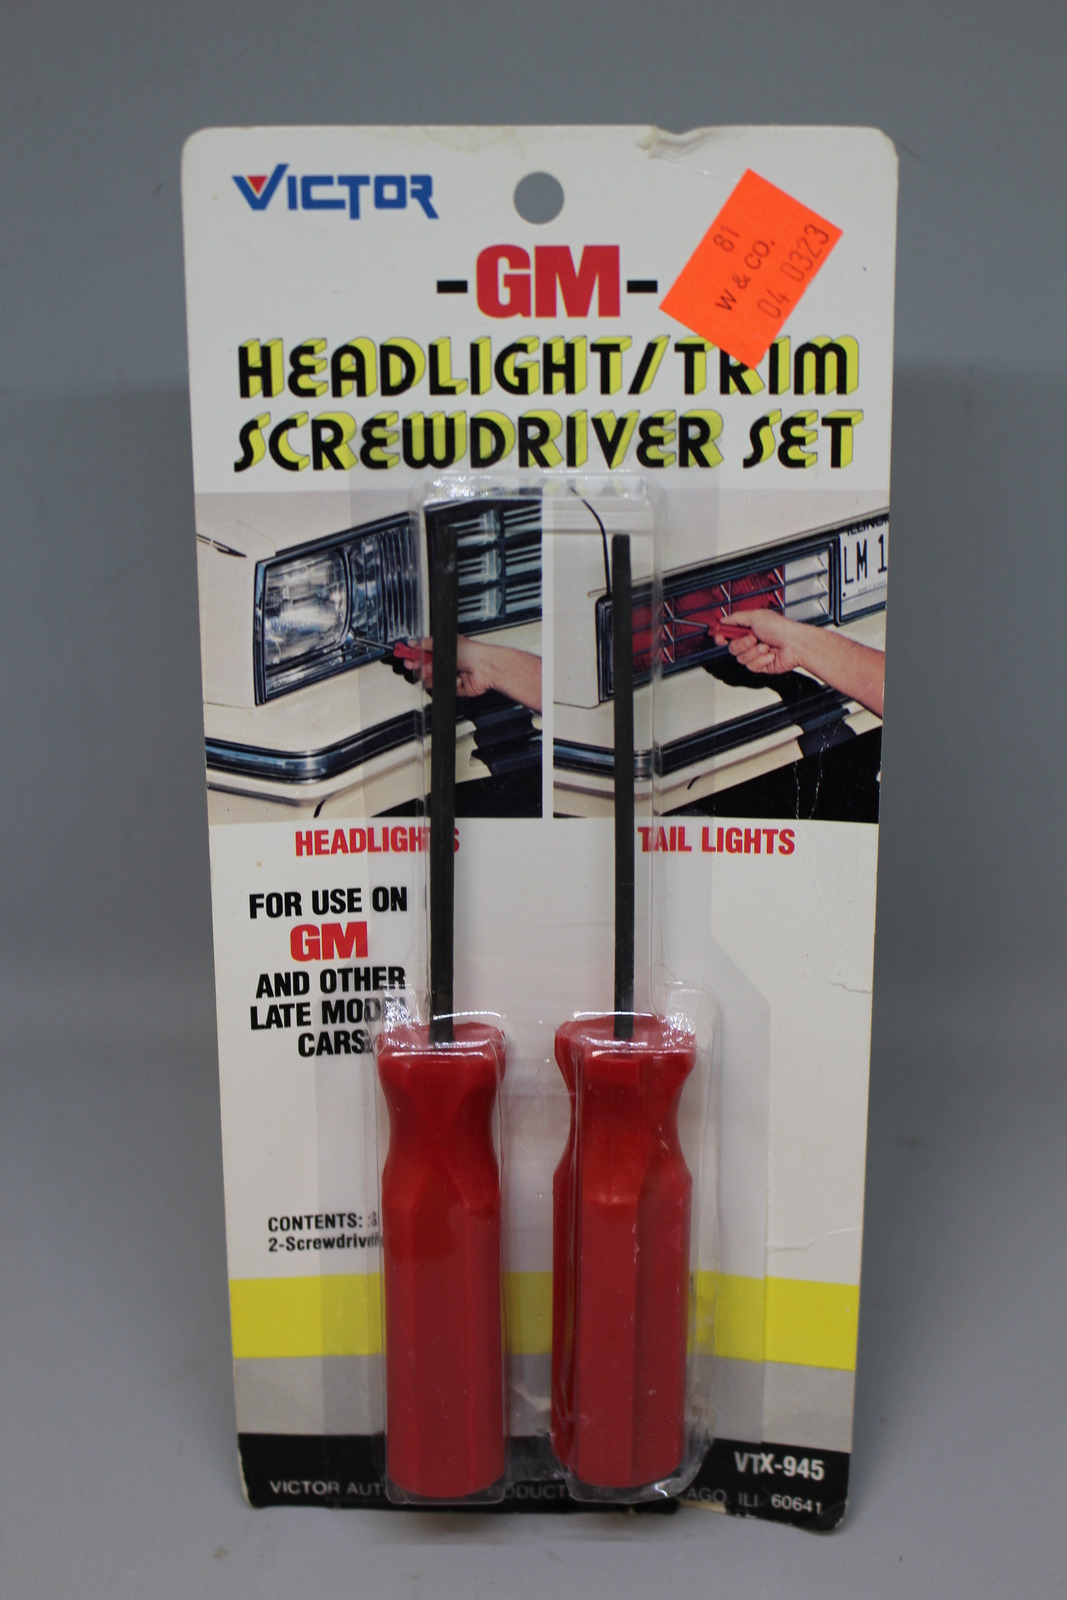 Victor GM Headlight / Trim Screwdriver Set - VTX-945 - New